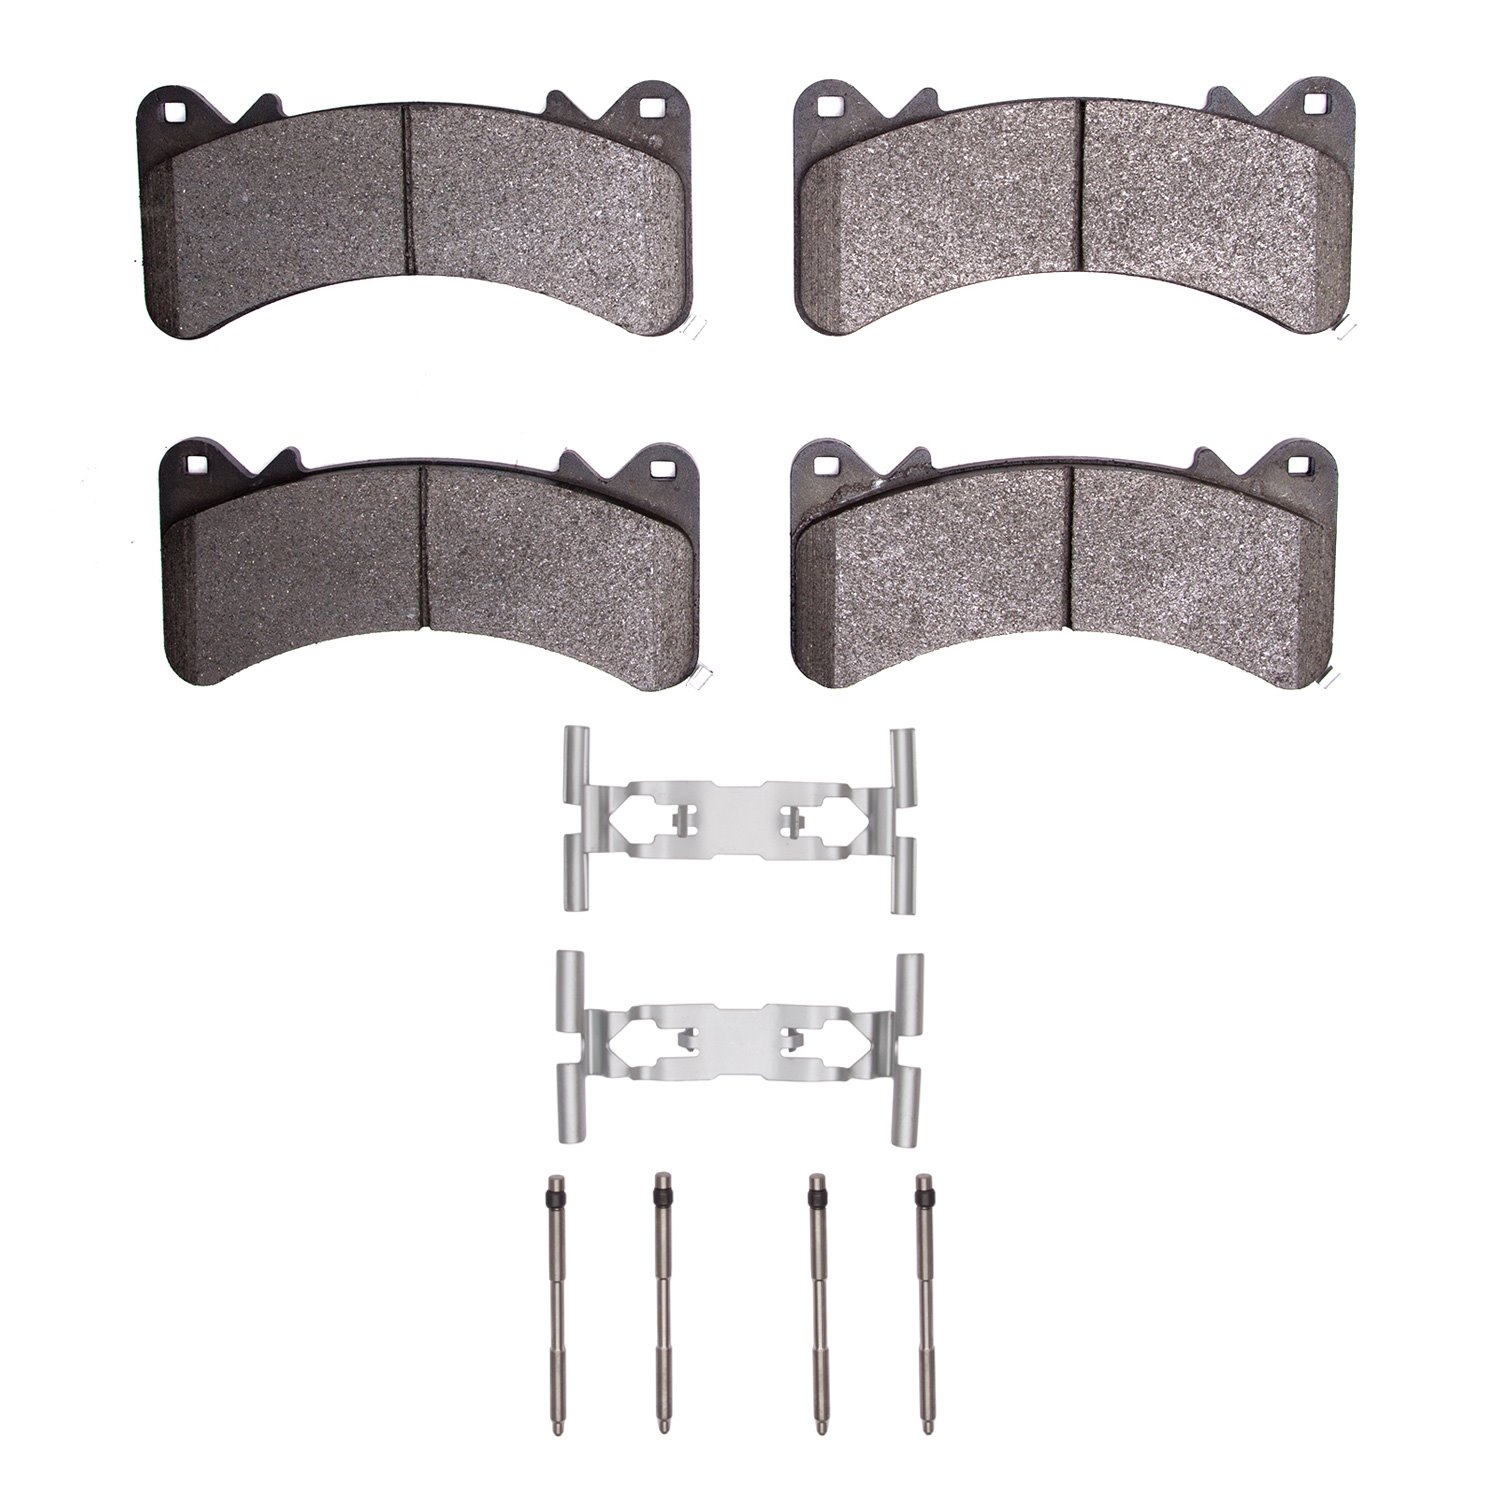 Euro Ceramic Brake Pads & Hardware Kit, Fits Select GM, Position: Front